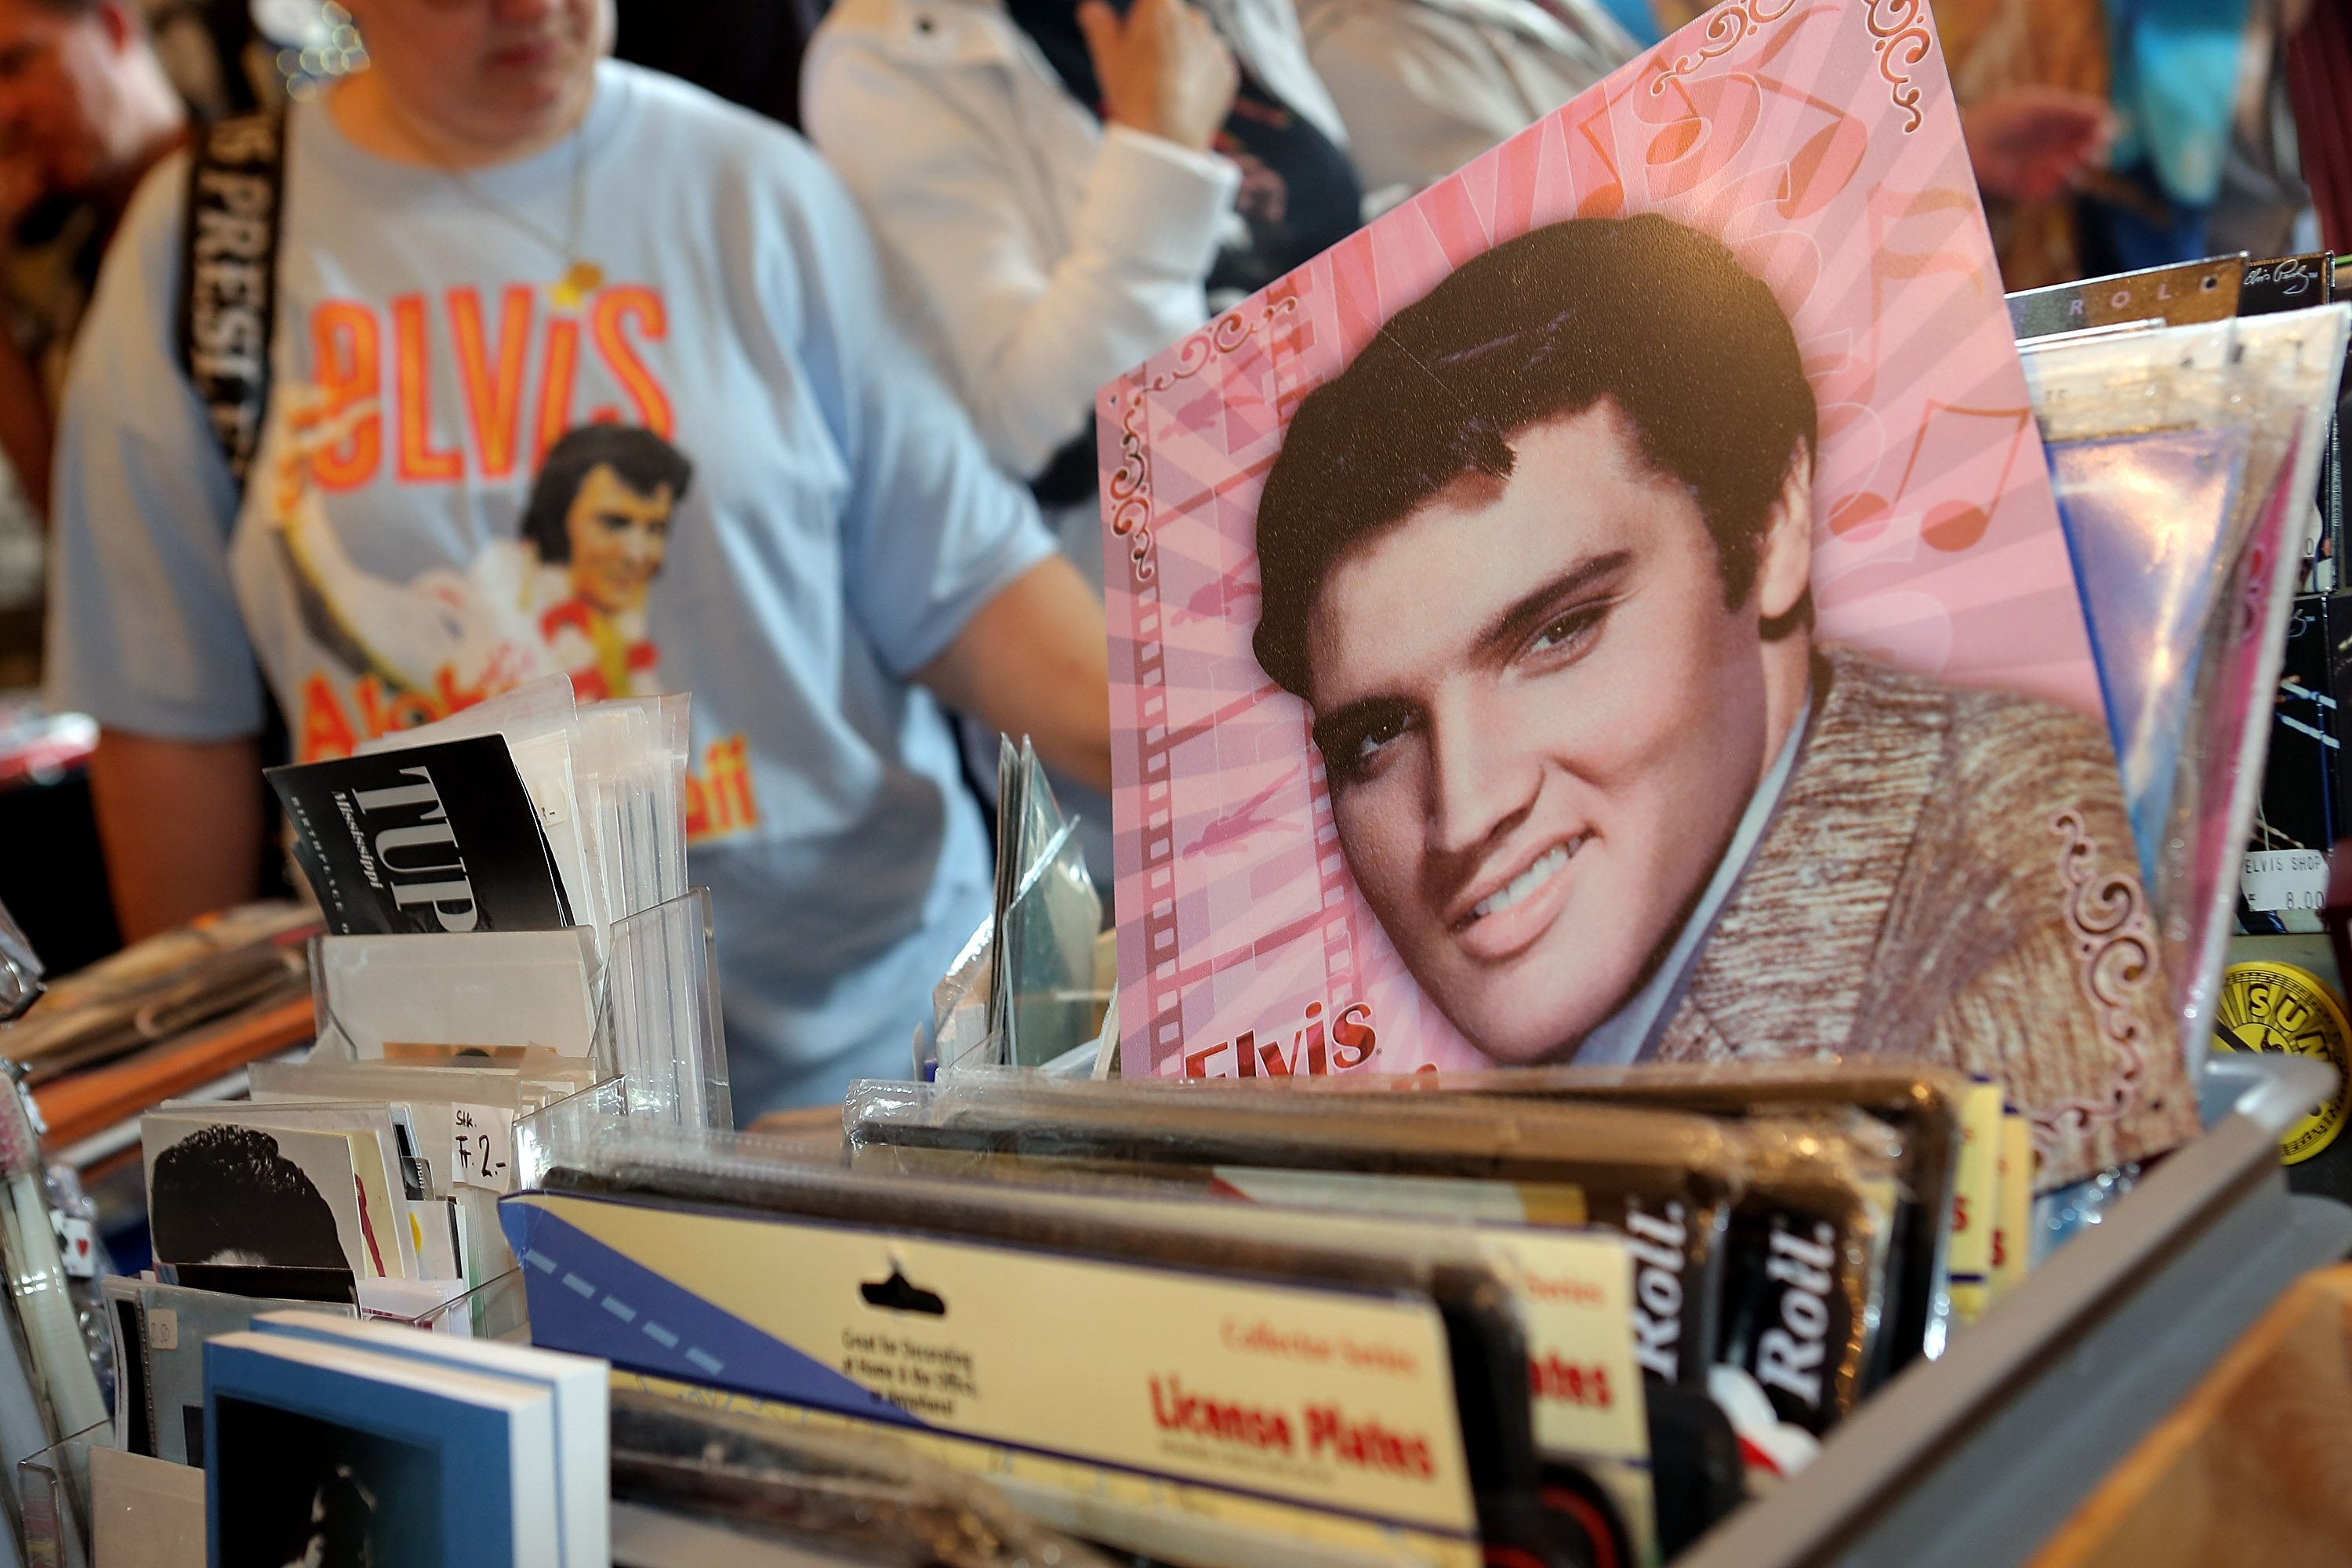 A headshot of Elvis Presley near someone wearing an Elvis shirt